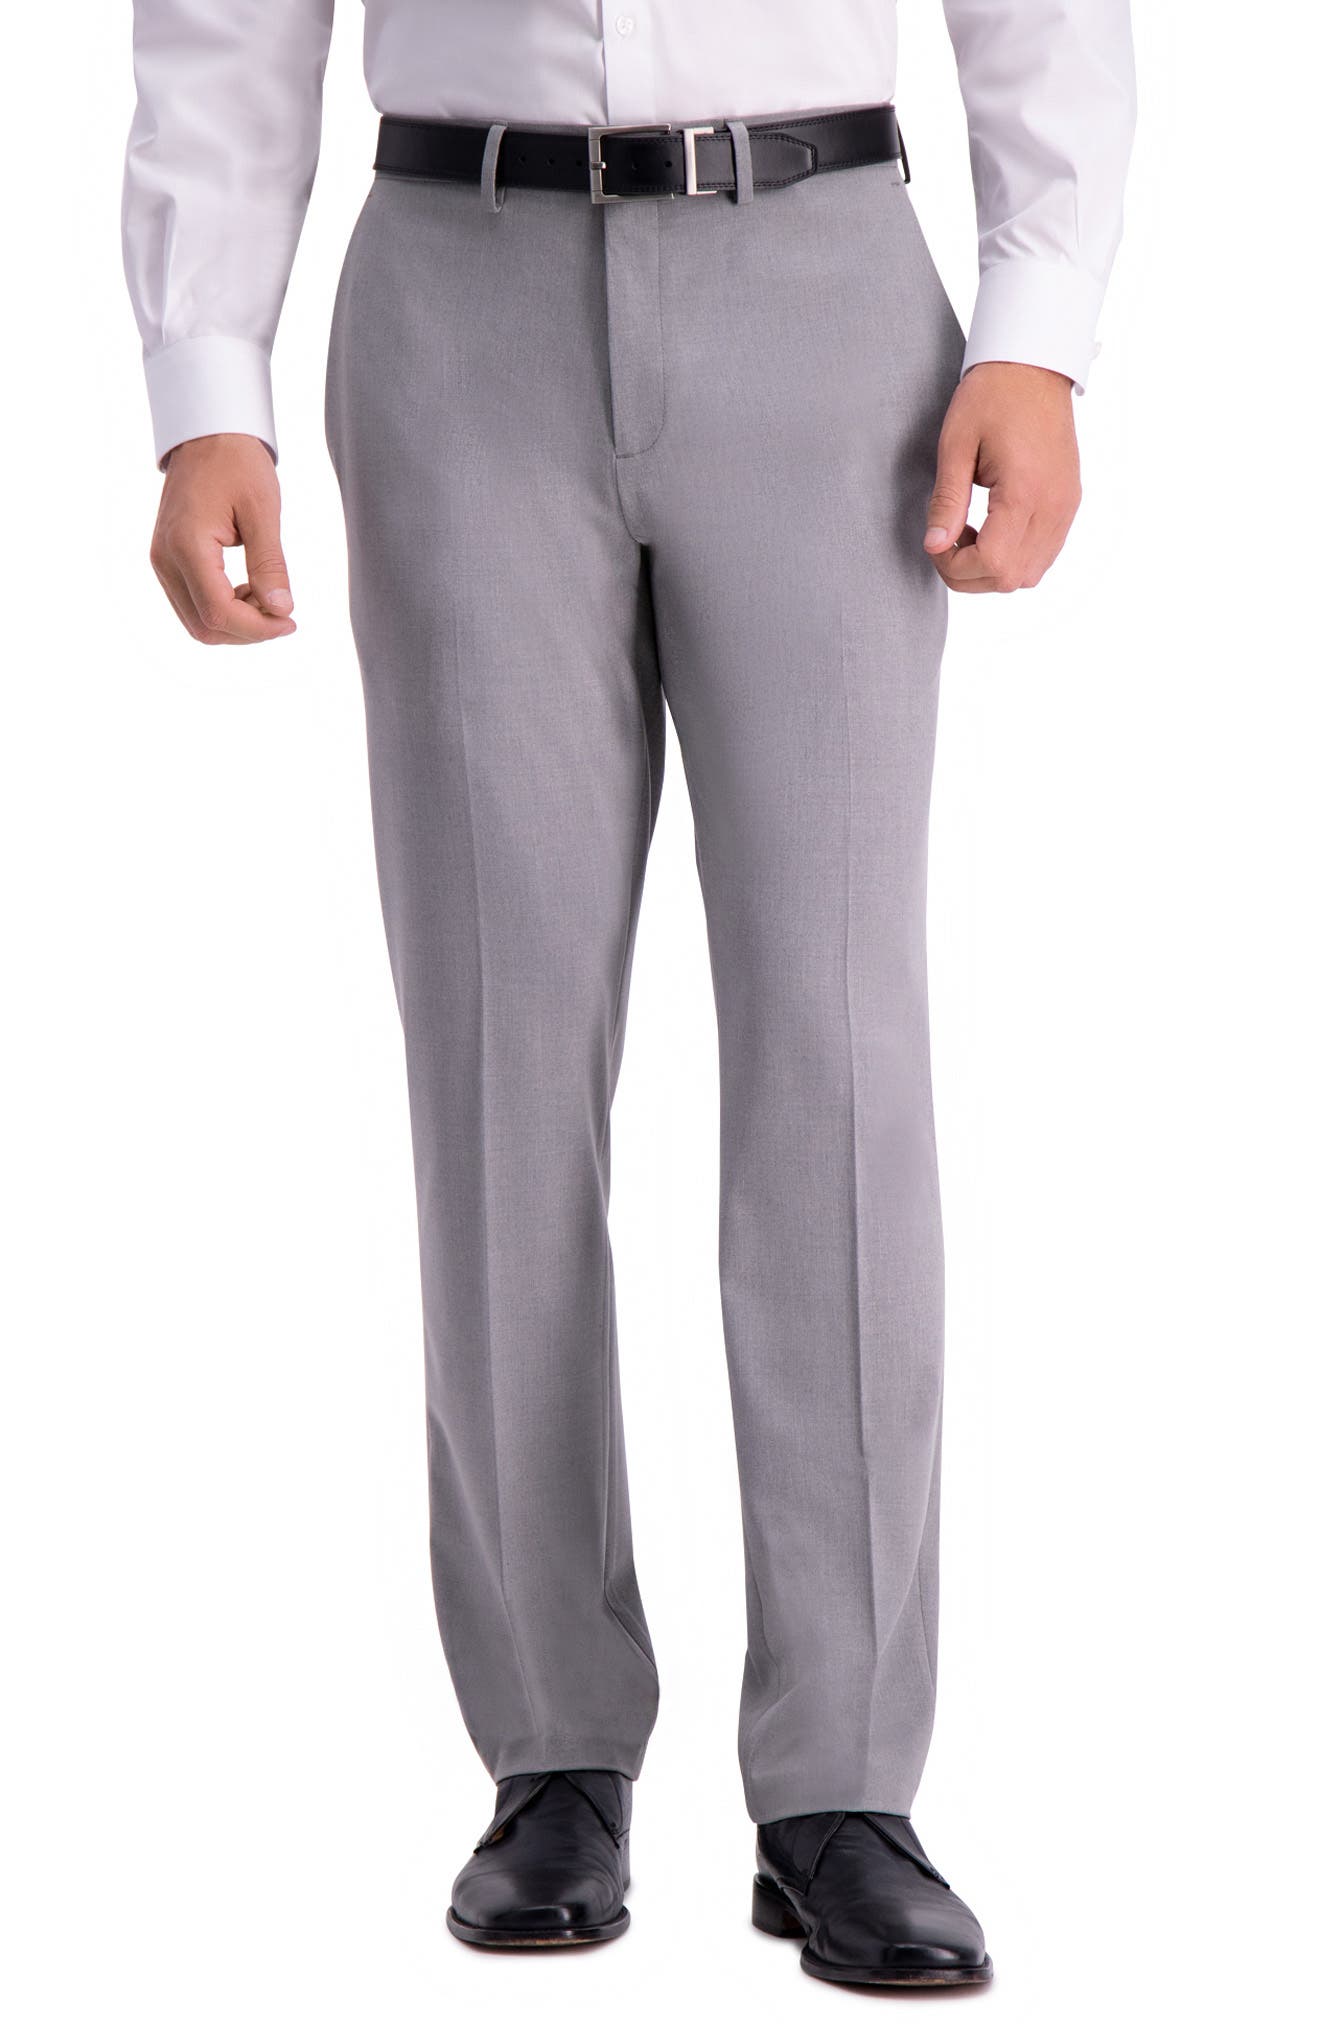 Marc Anthony Linen Pants Slim Fit Gray Pant MSRP $70.00 